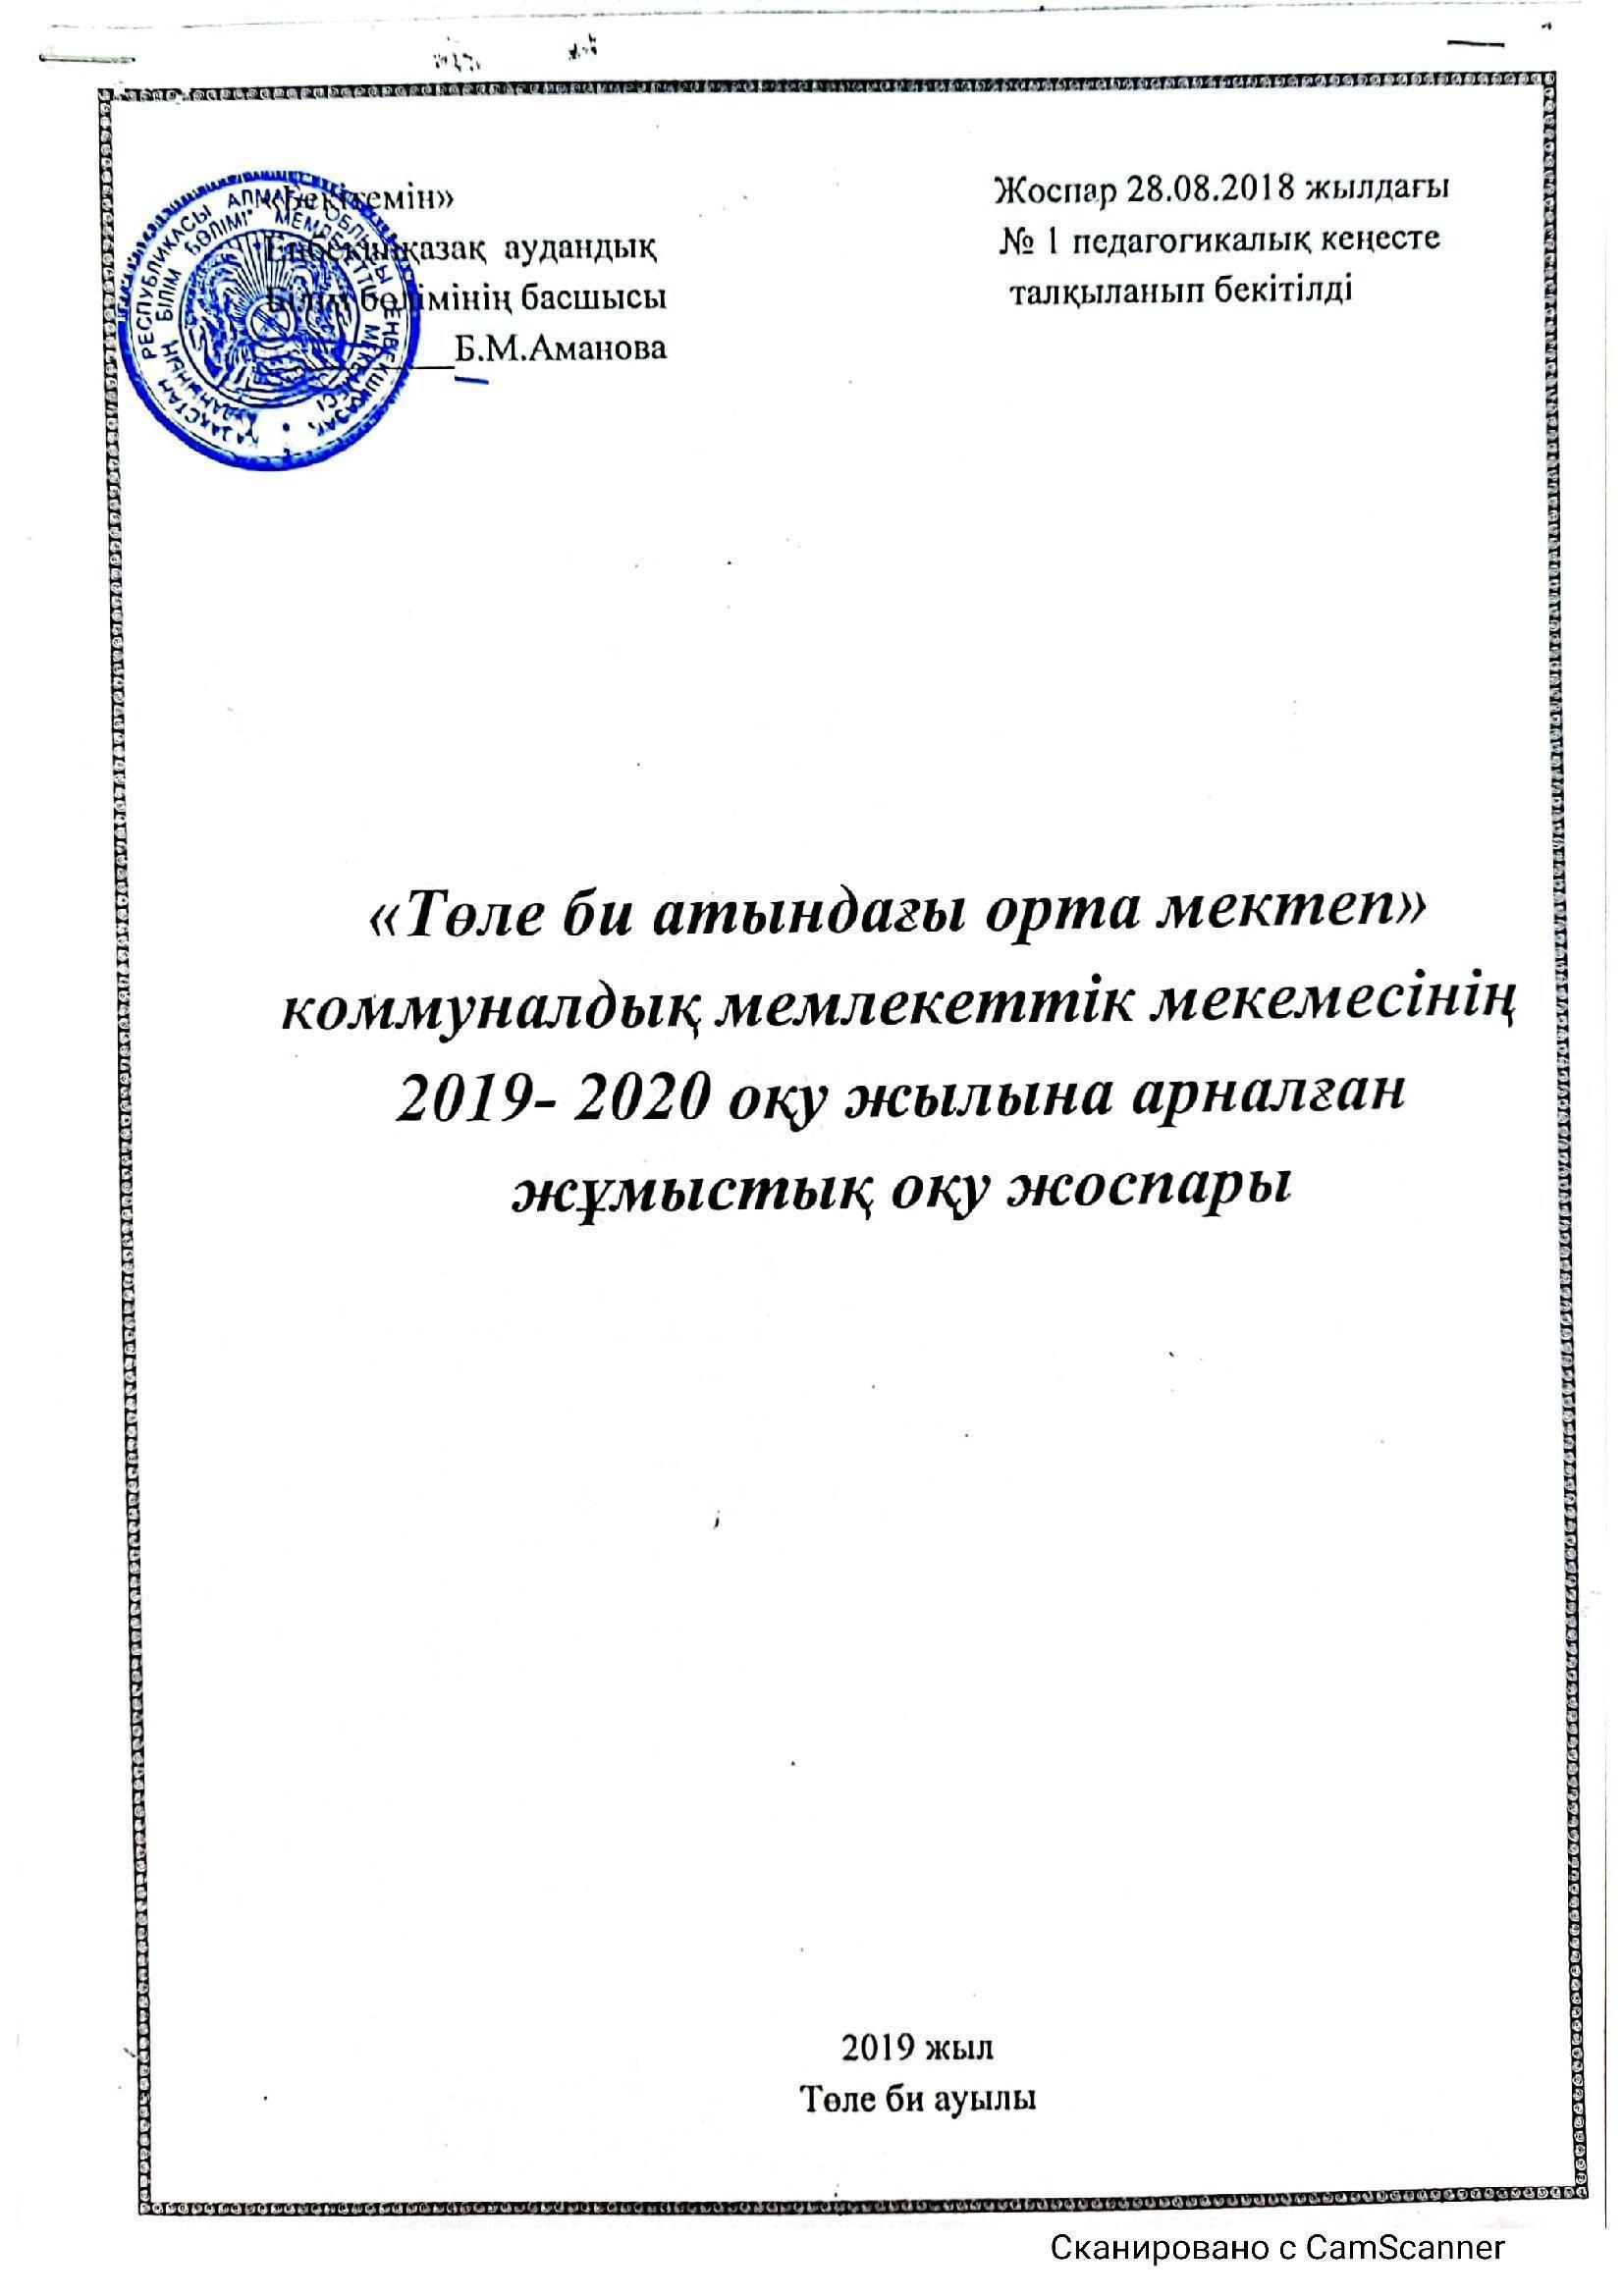 Оқу жоспары  2019-2020